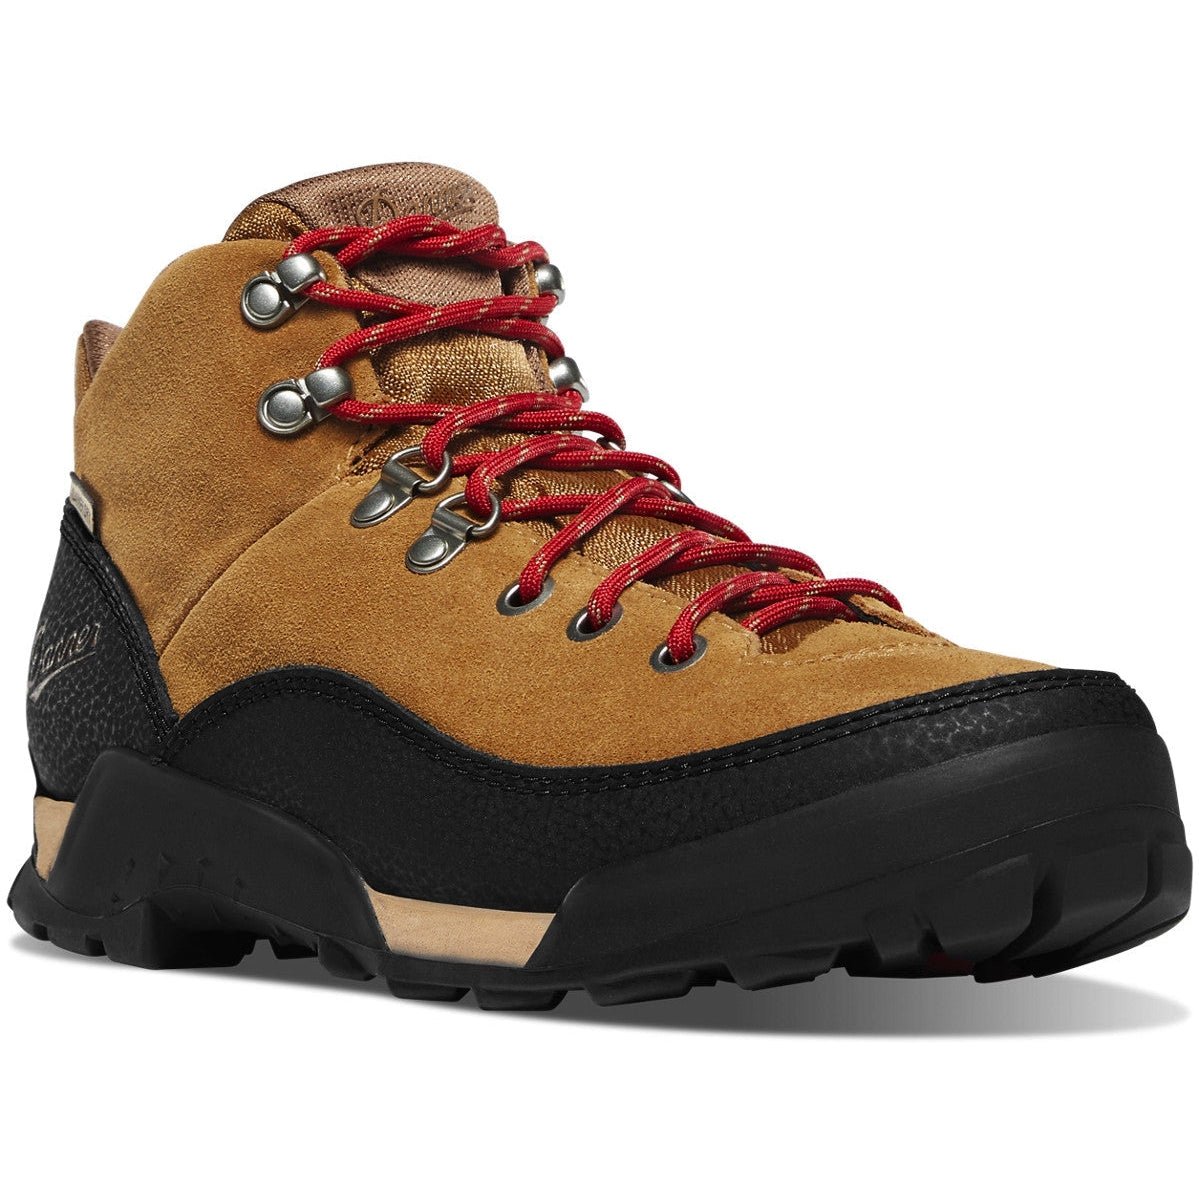 Danner Women's Panorama Mid 6" Waterproof Hiking Boot - Brown/Red - 63434 5 / Medium / Brown Red - Overlook Boots